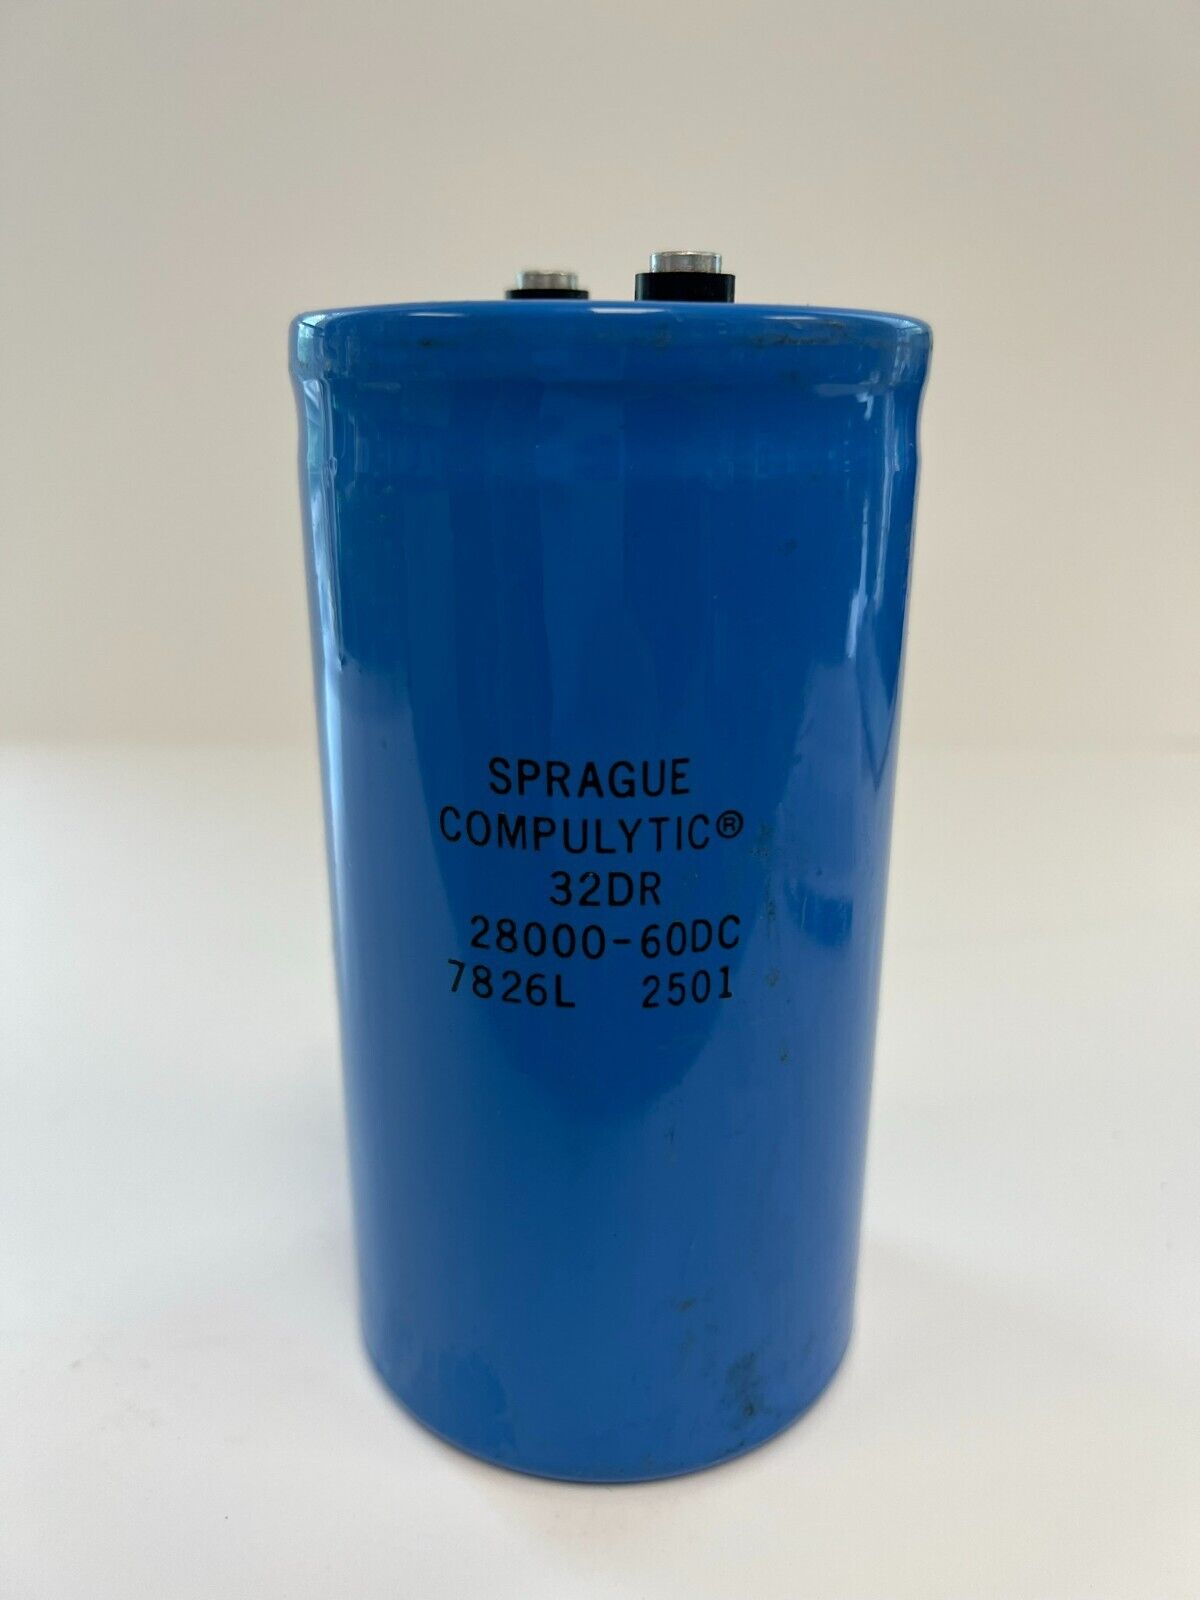 Sprague Compulytic 32DR 28000-60DC 7826L 2501 Capacitor